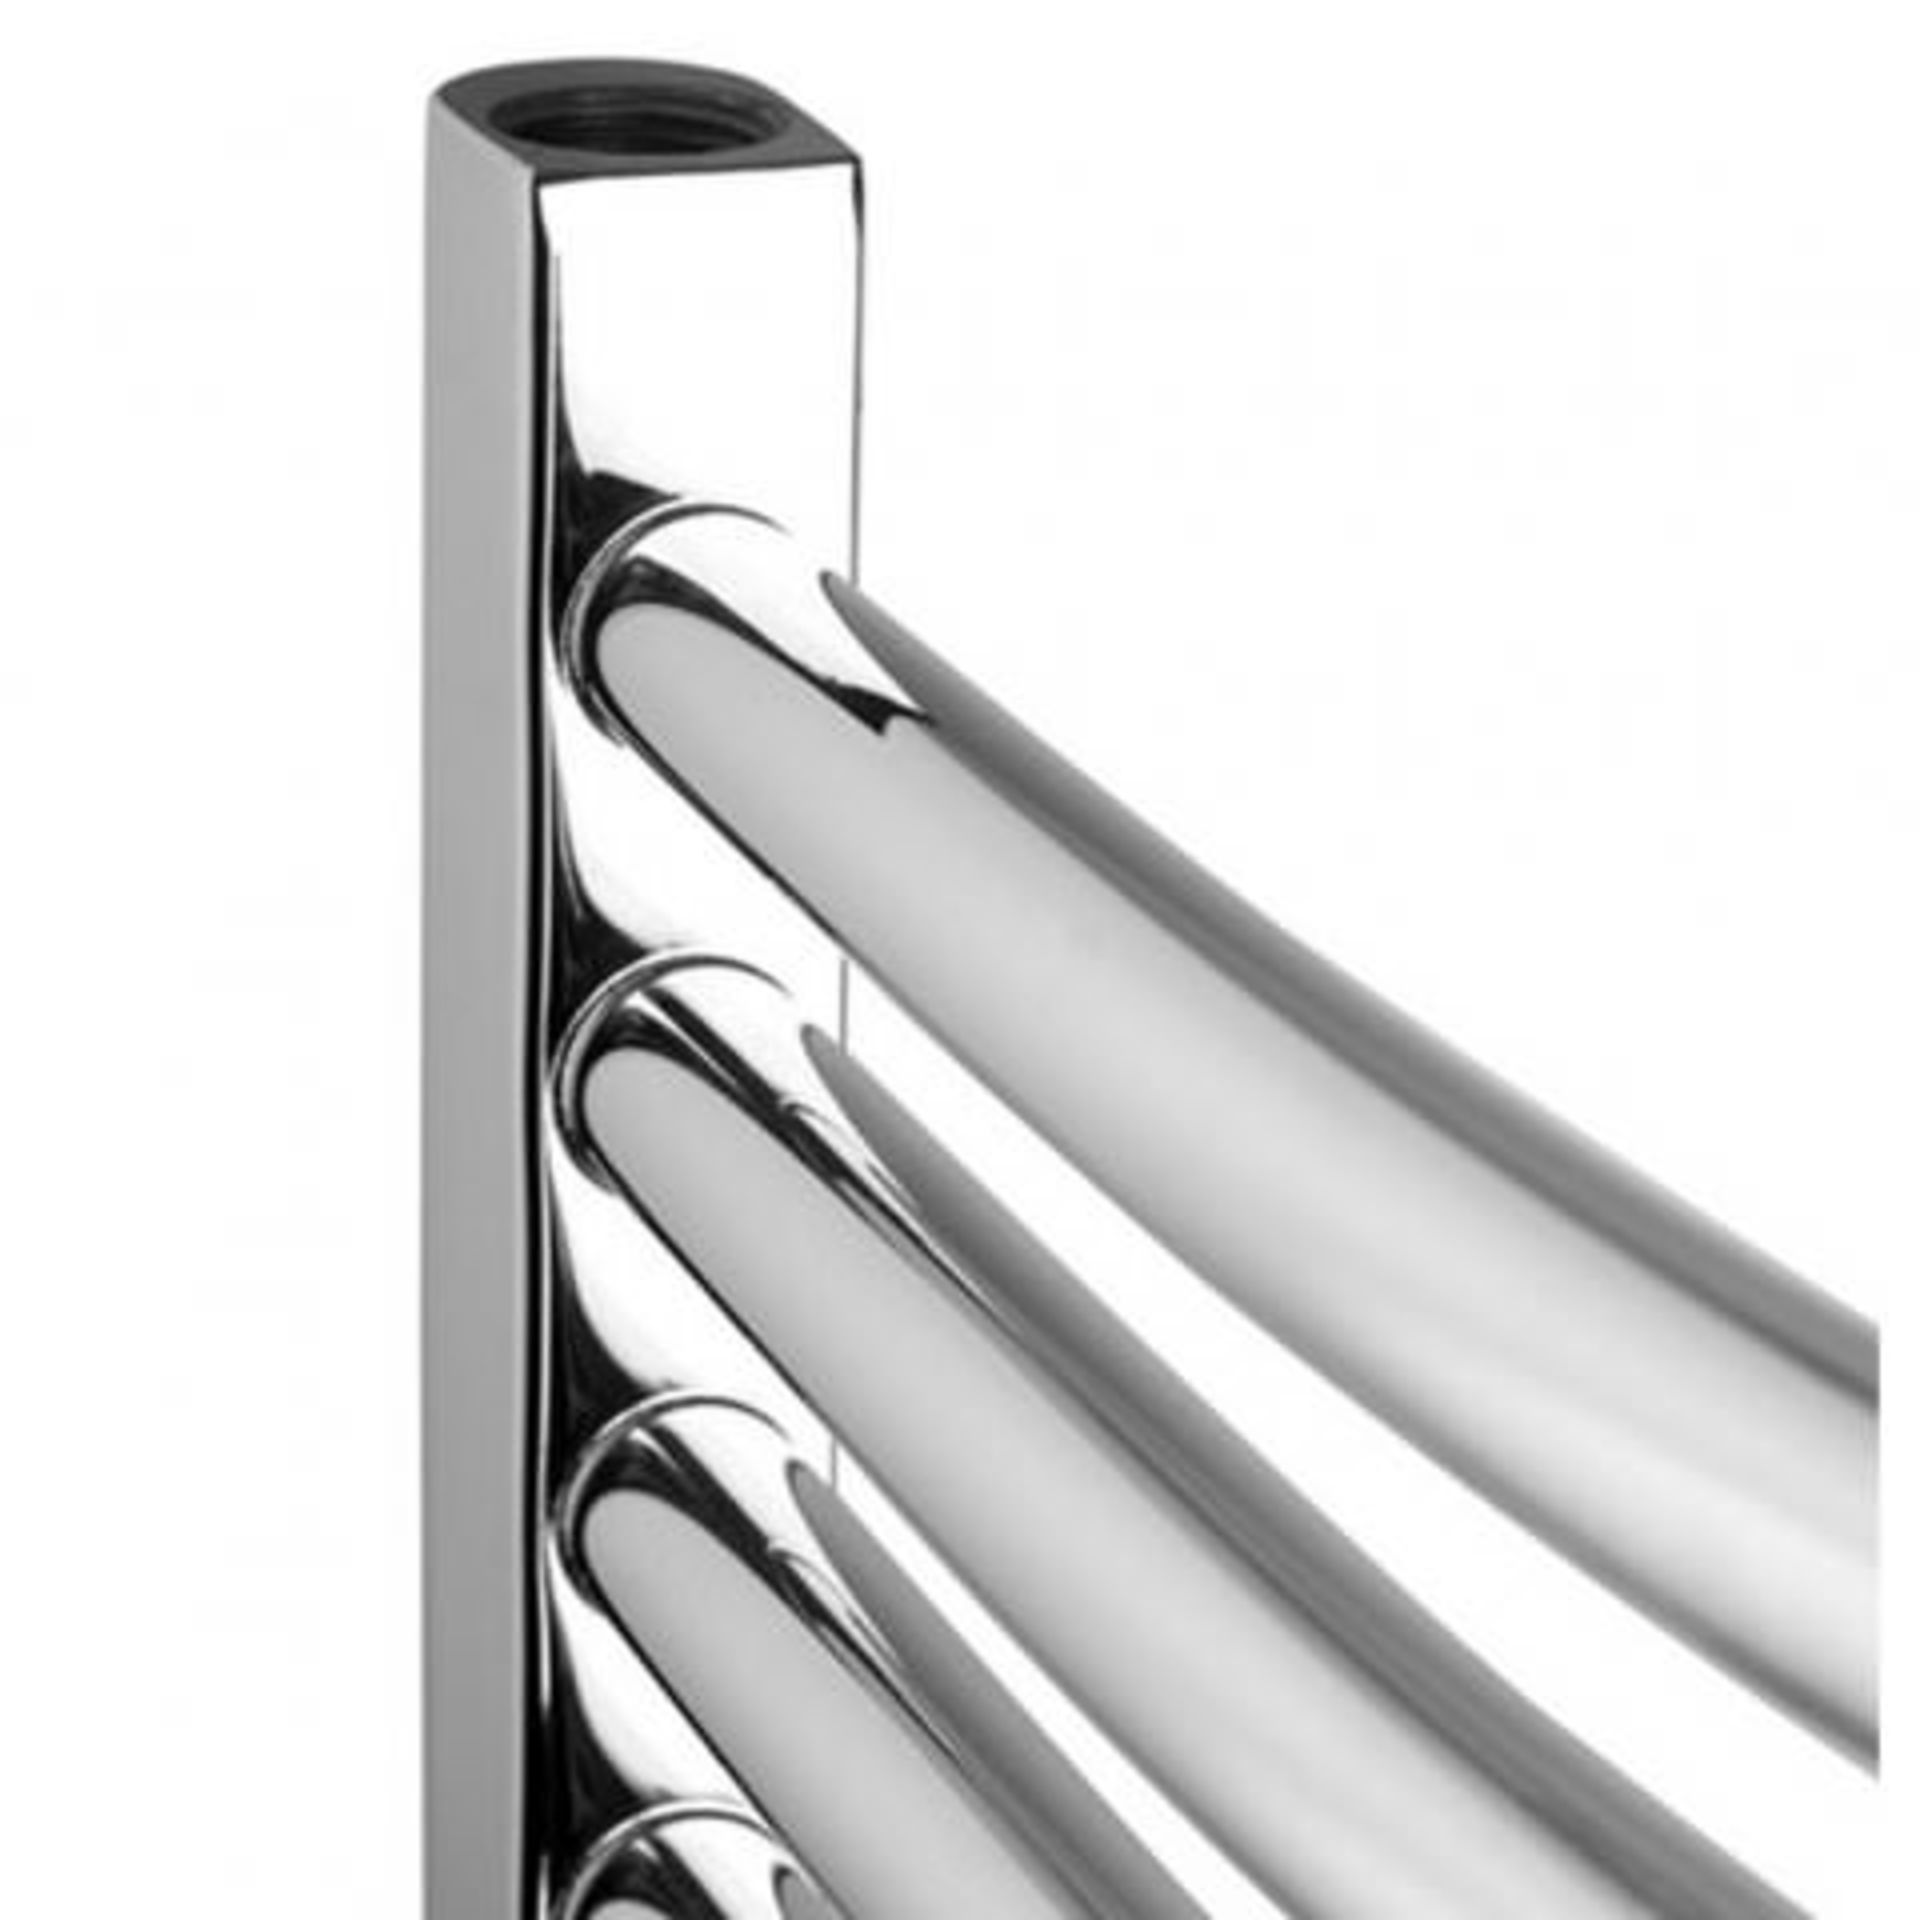 (I29) 1000x600mm - 20mm Tubes - Chrome Curved Rail Ladder Towel Radiator. Our Nancy 1000x600mm - Image 4 of 5